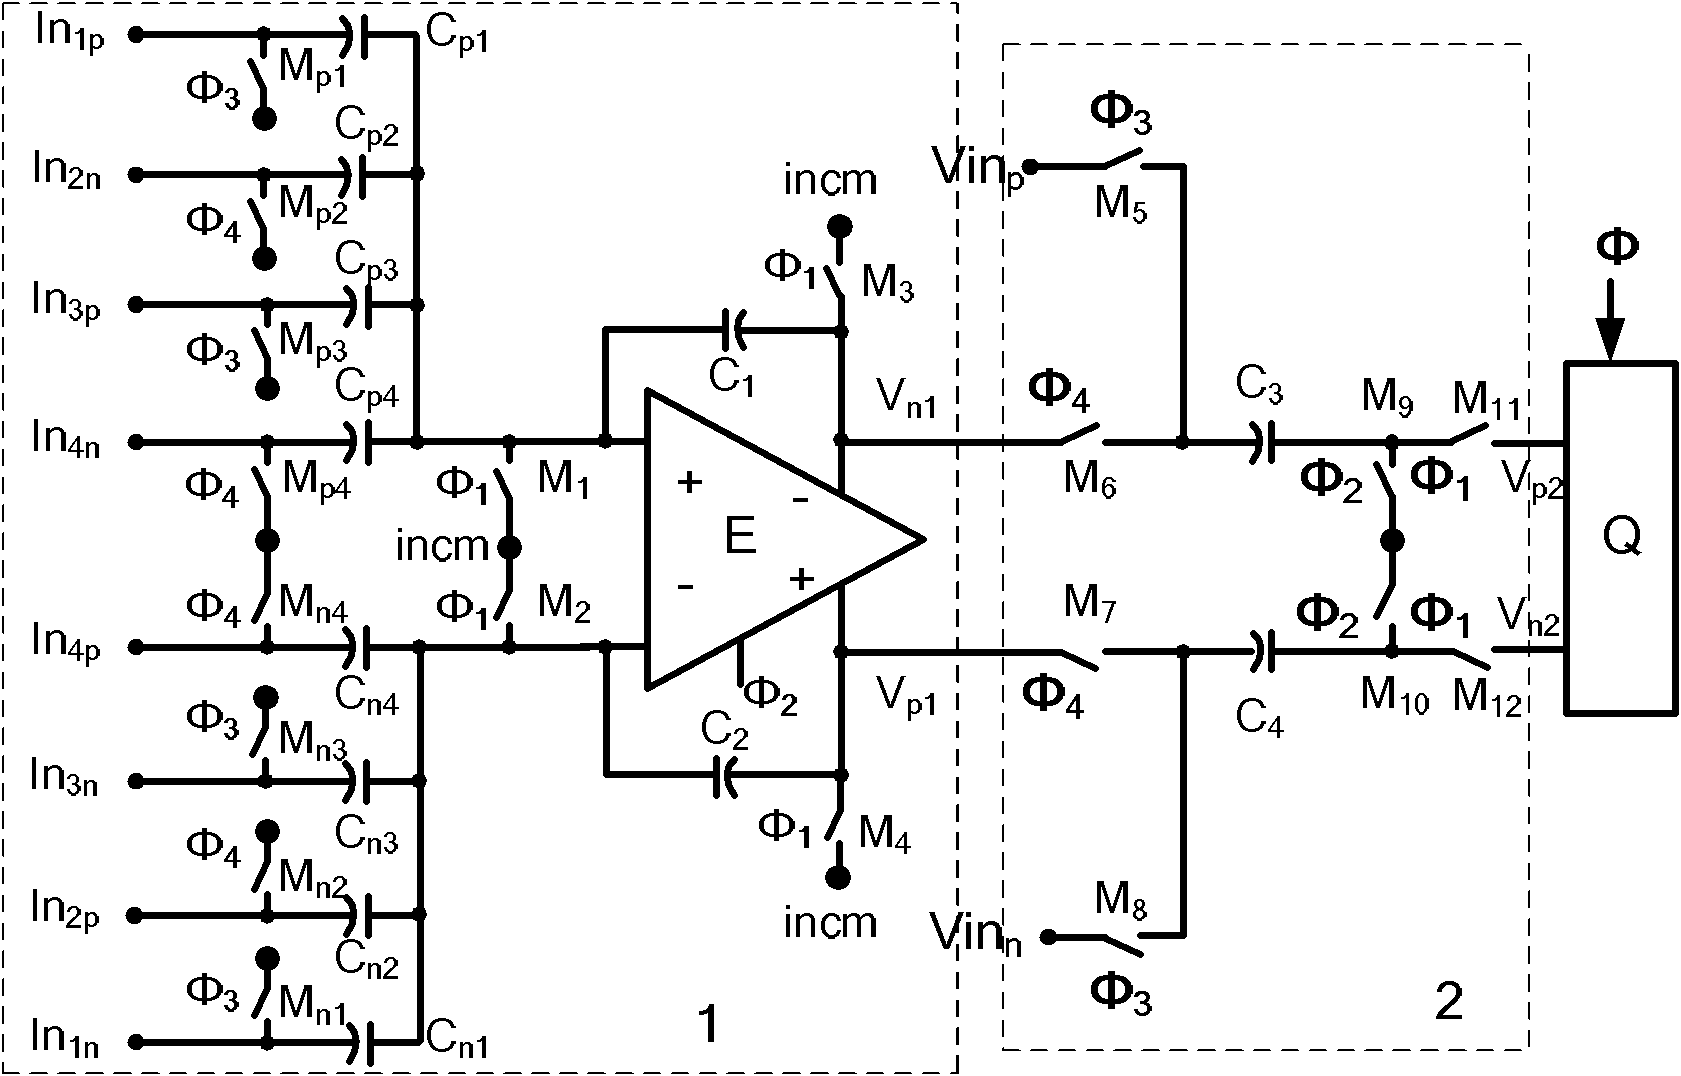 Low-power-consumption two-step feedforward adder circuit